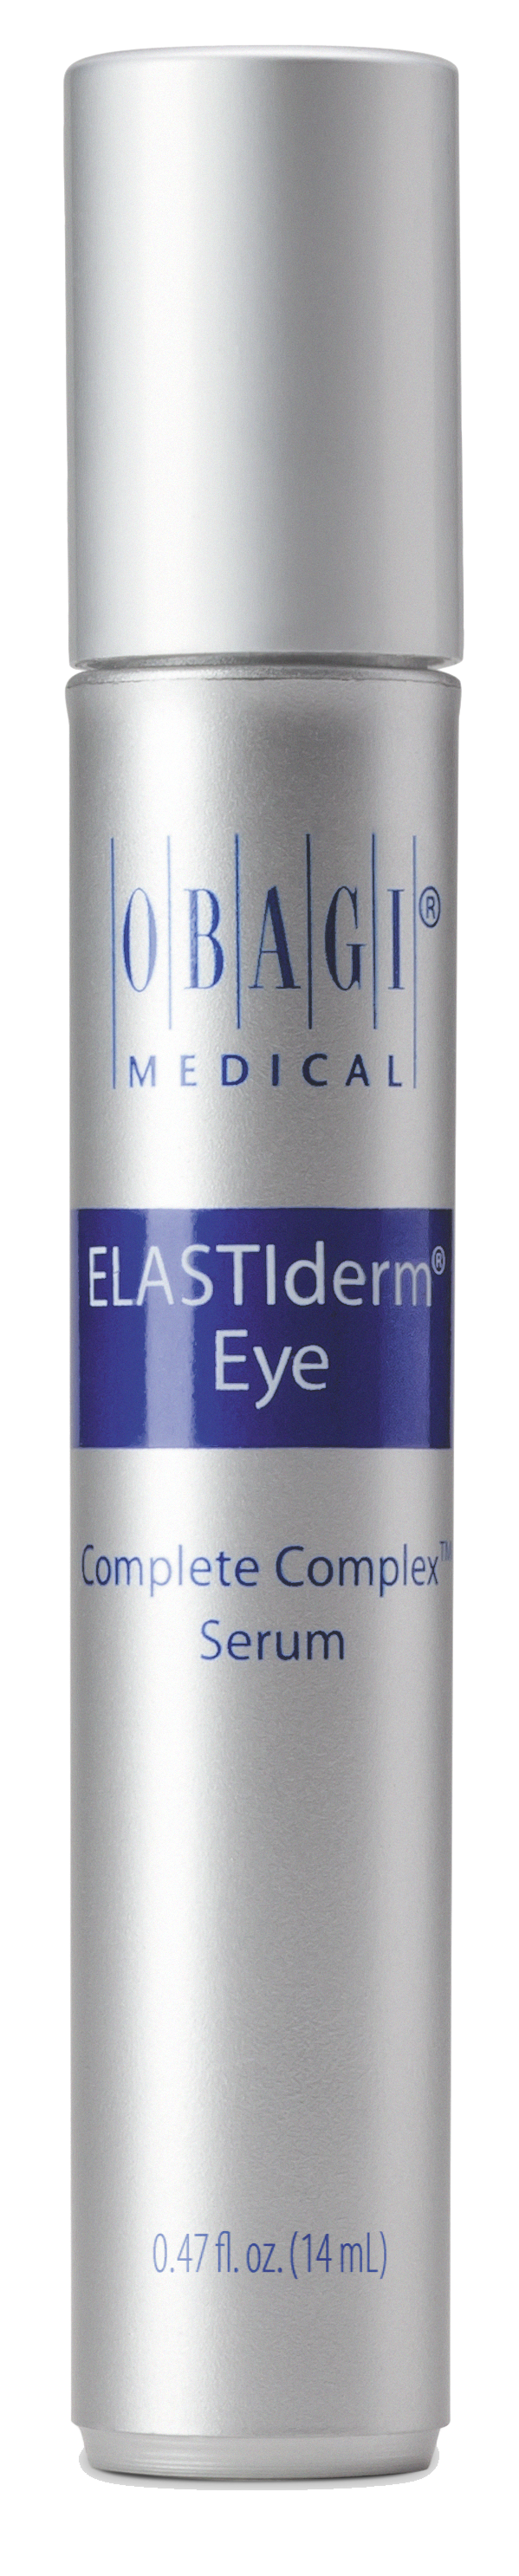 Obagi | ELASTIderm Eye Complete Complex Serum (14ml)